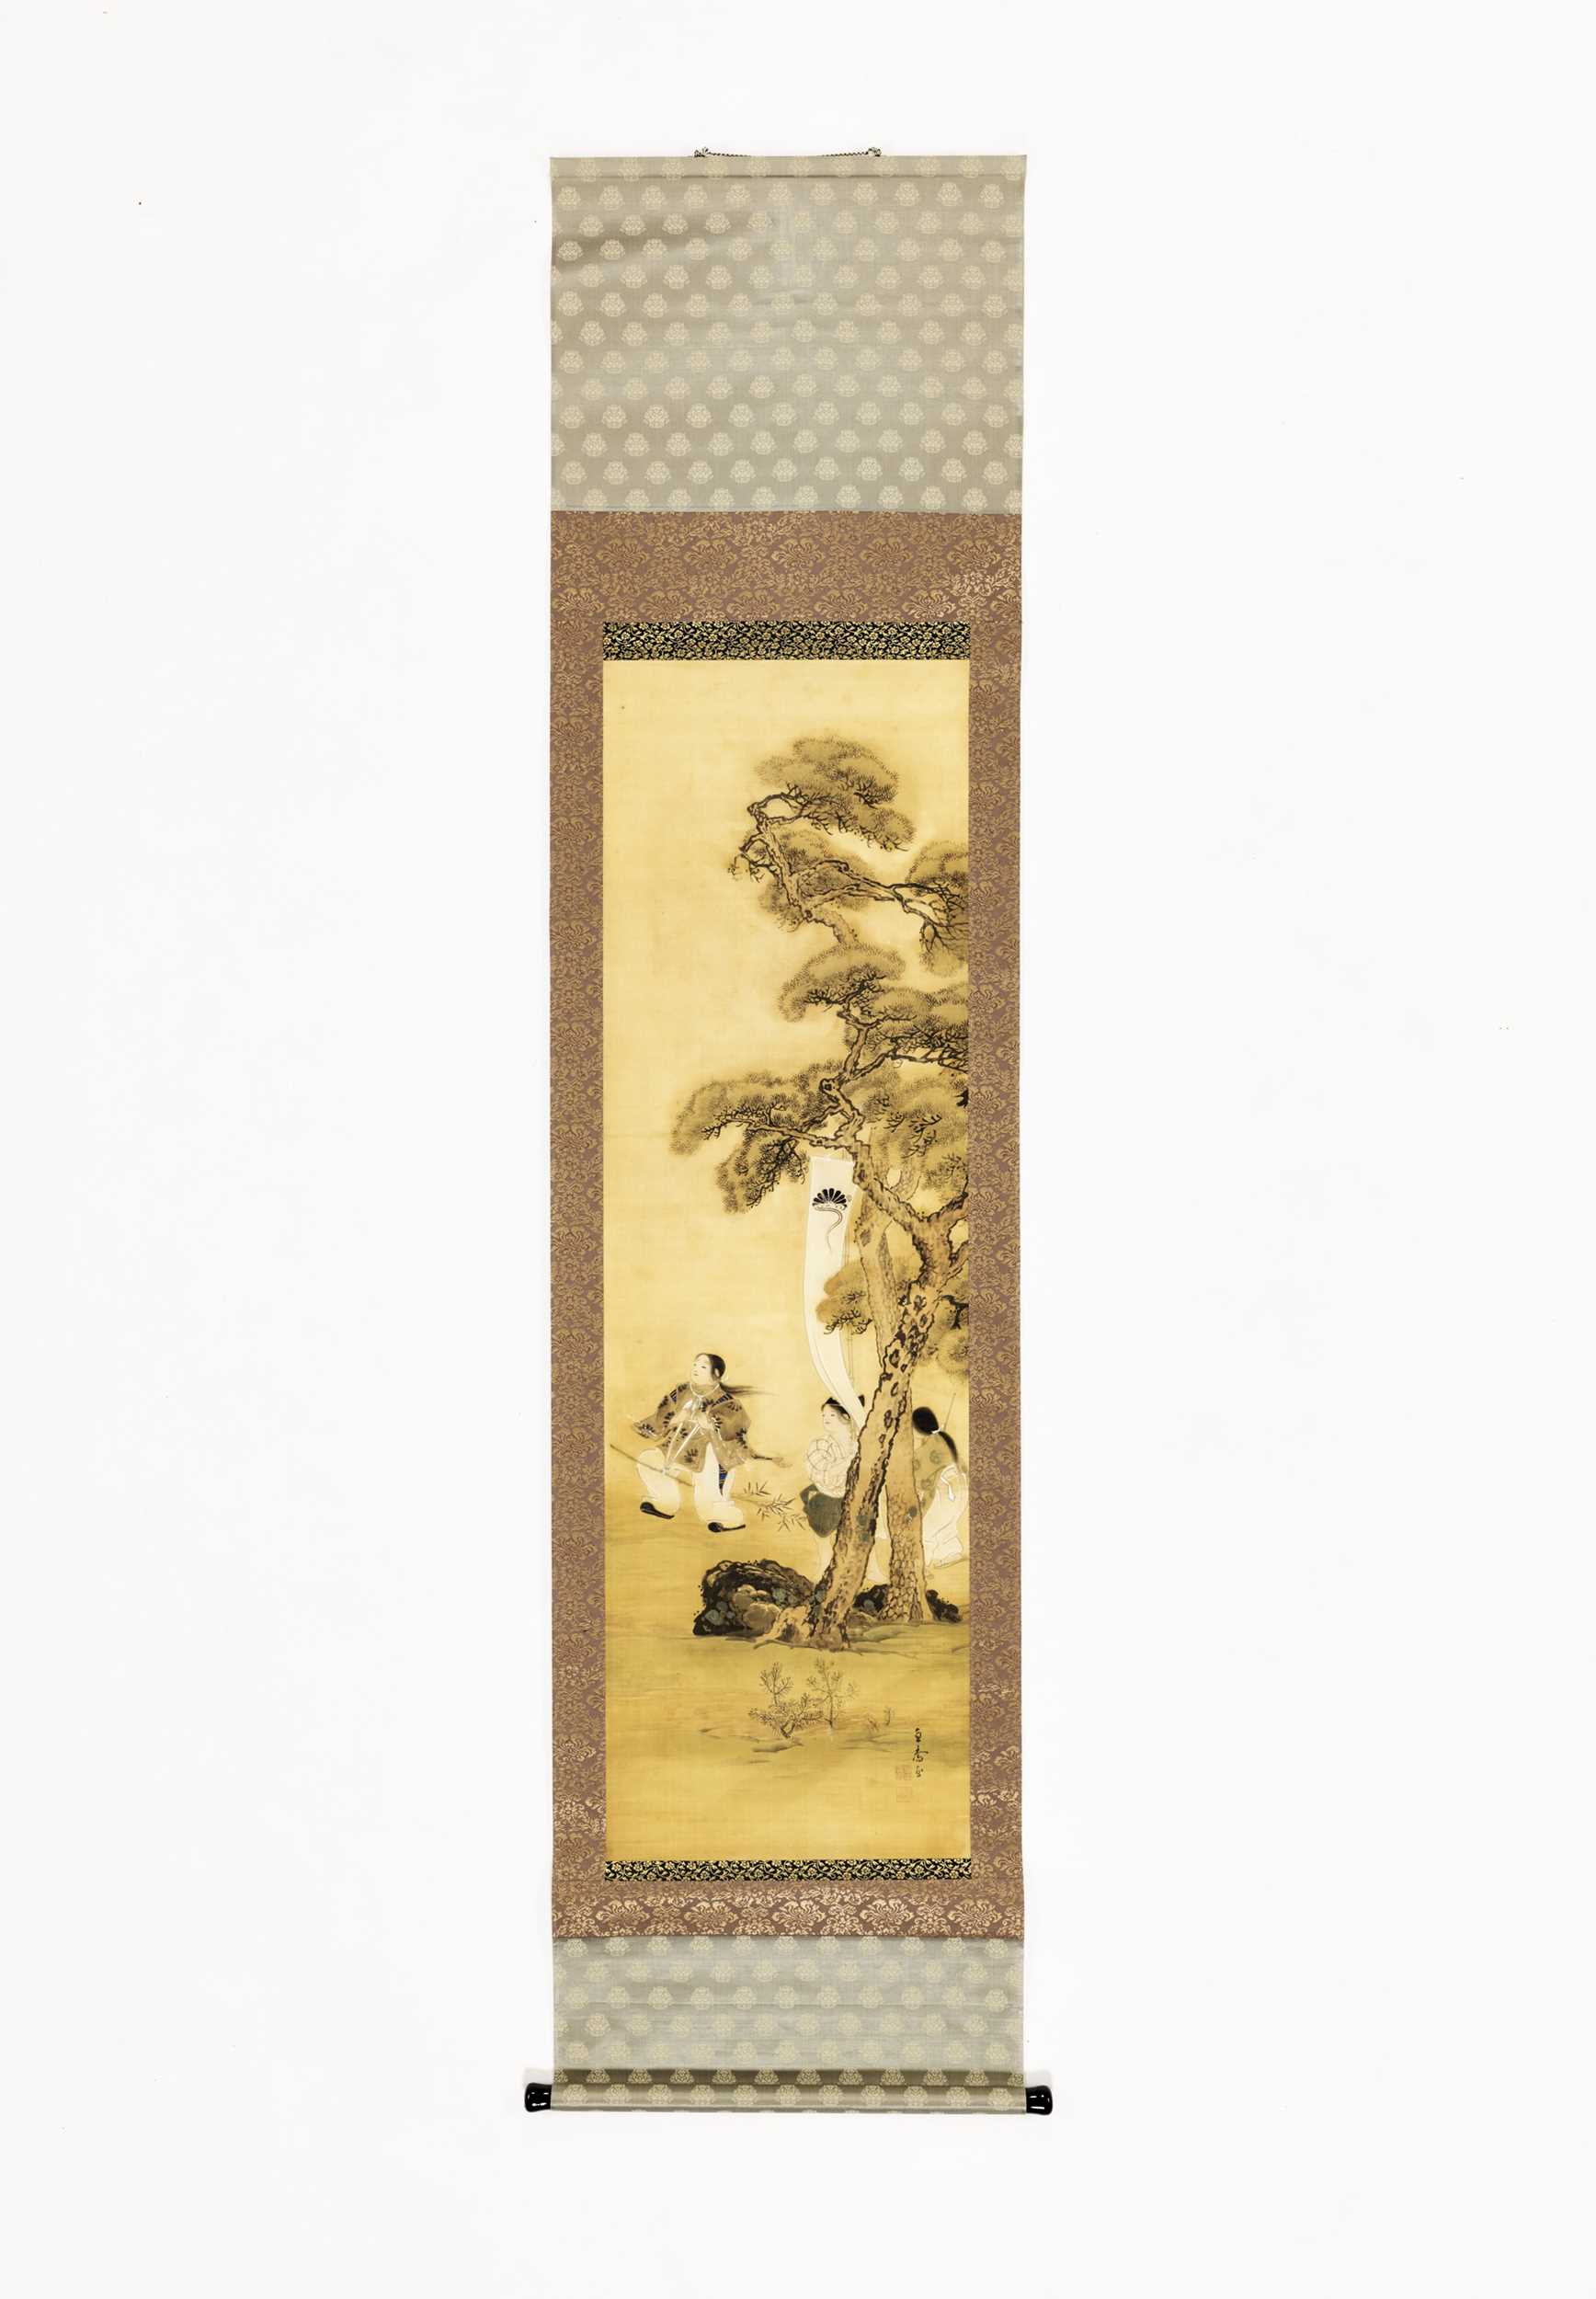 Lot 565 - UENAKA CHOKUSAI: A SCROLL PAINTING OF THREE GIRLS PLAYING UNDER PINE TREES